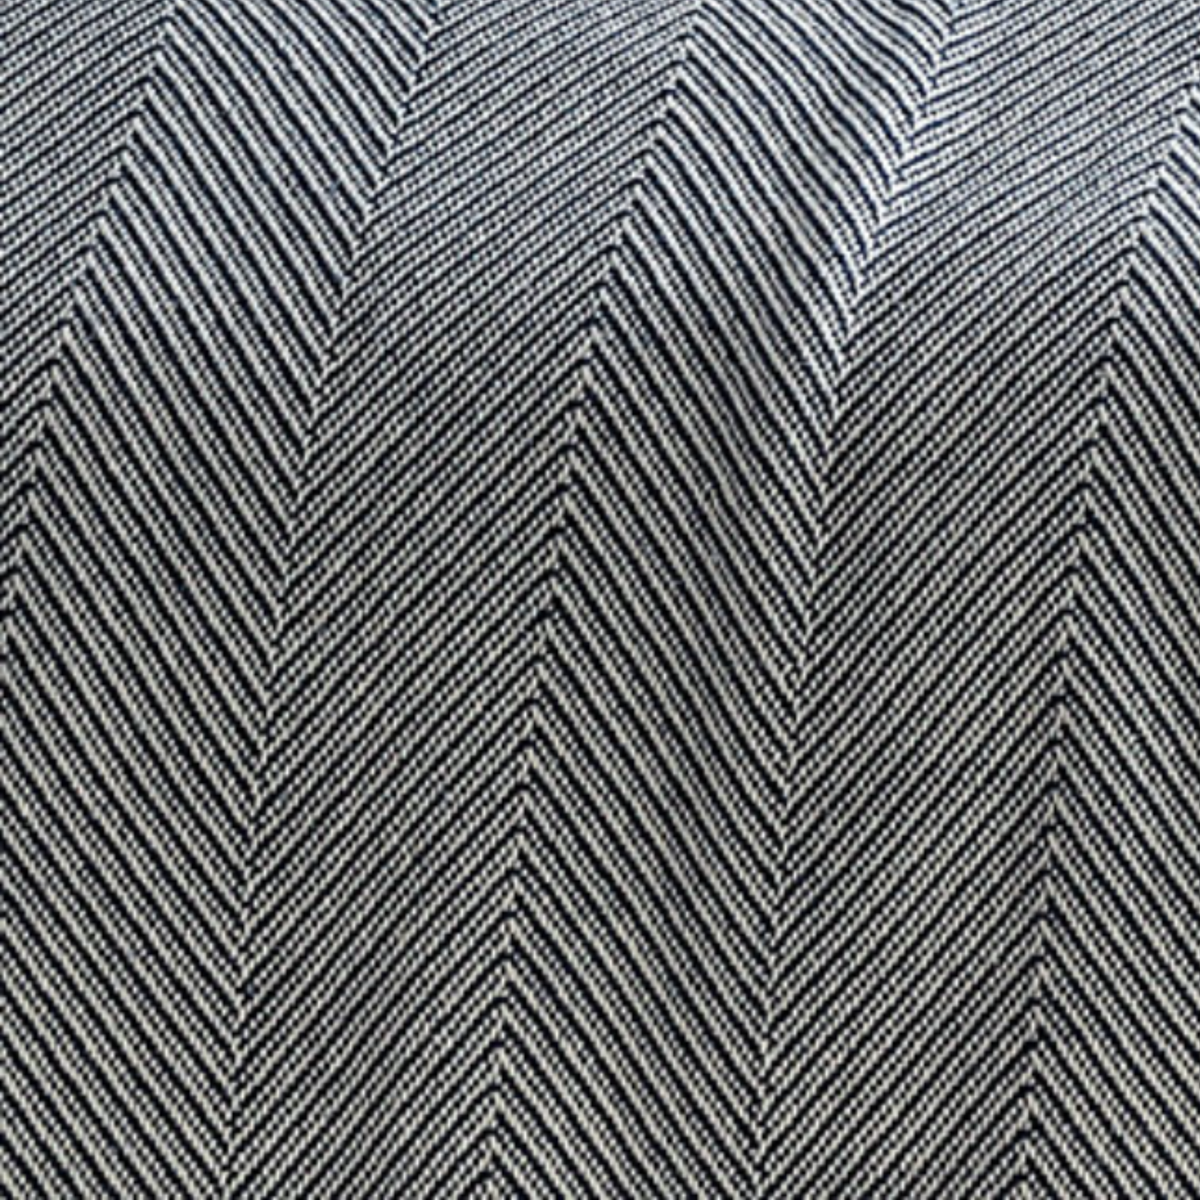 Swatch Sample of Pine Cone Hill Herringbone Blanket in Navy/Ivory Color